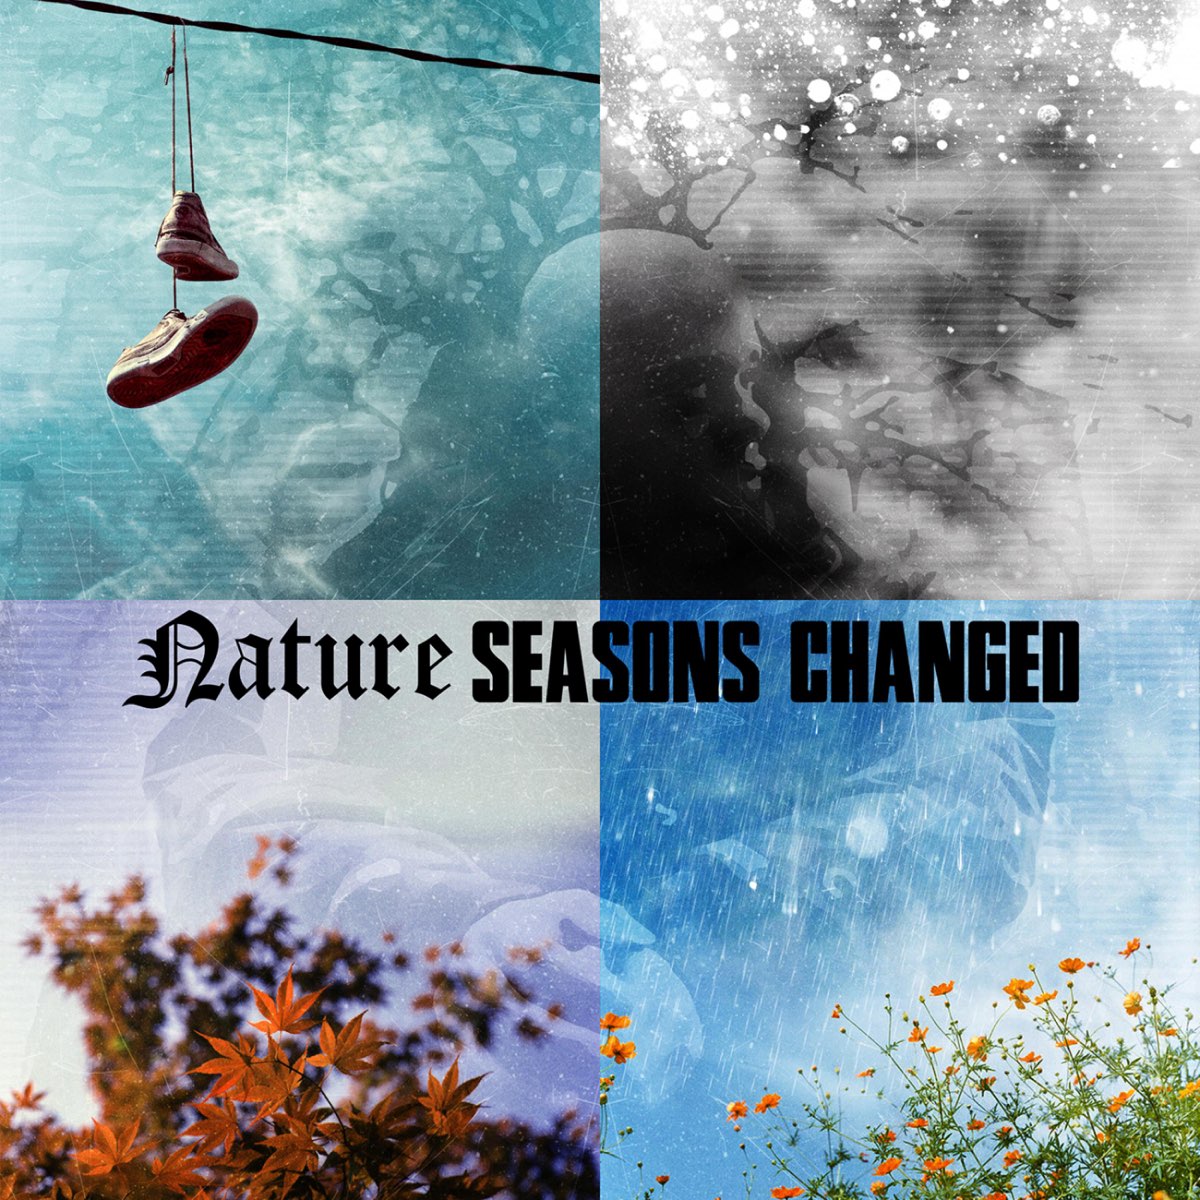 Seasons reasons. Seasons change песня слушать.